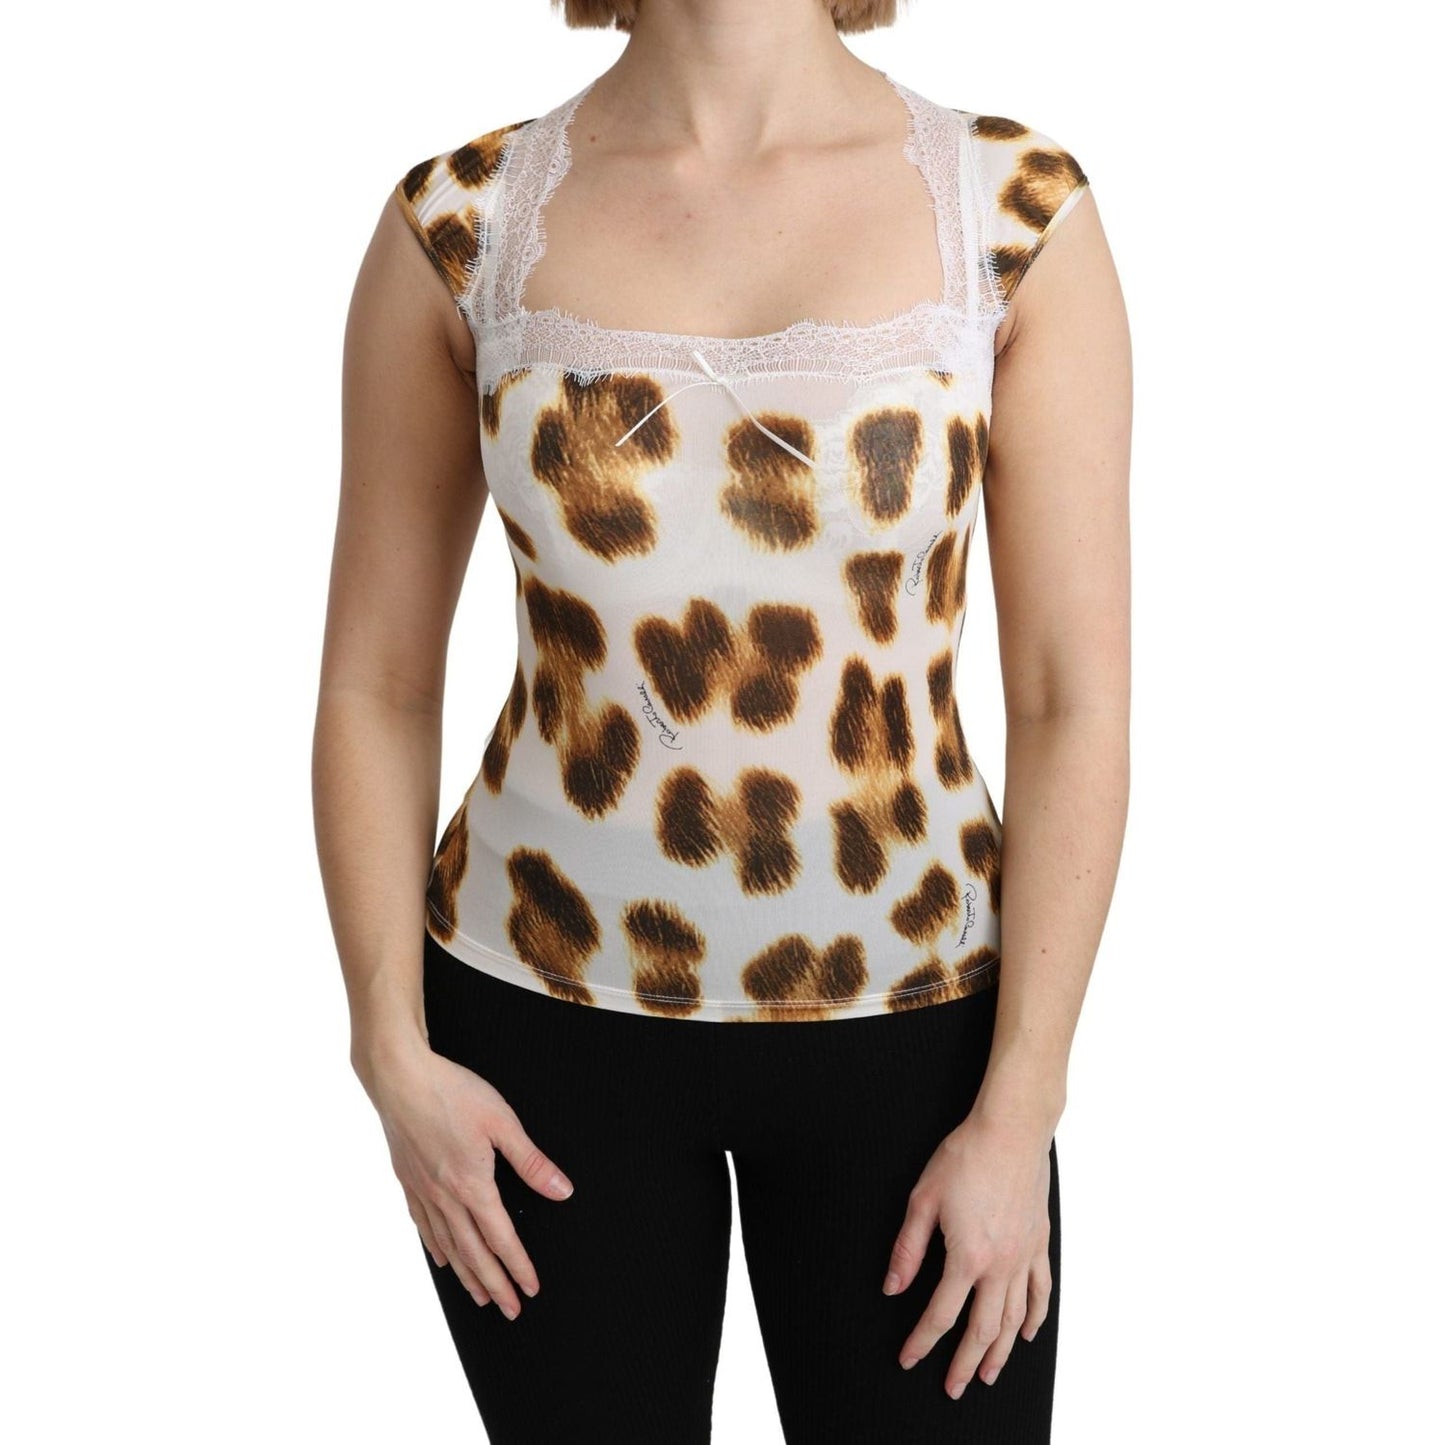 Roberto Cavalli Chic Leopard Lingerie Blouse Top white-brown-camisole-underwear-blouse IMG_1471-scaled-5c83ec8d-0d9.jpg